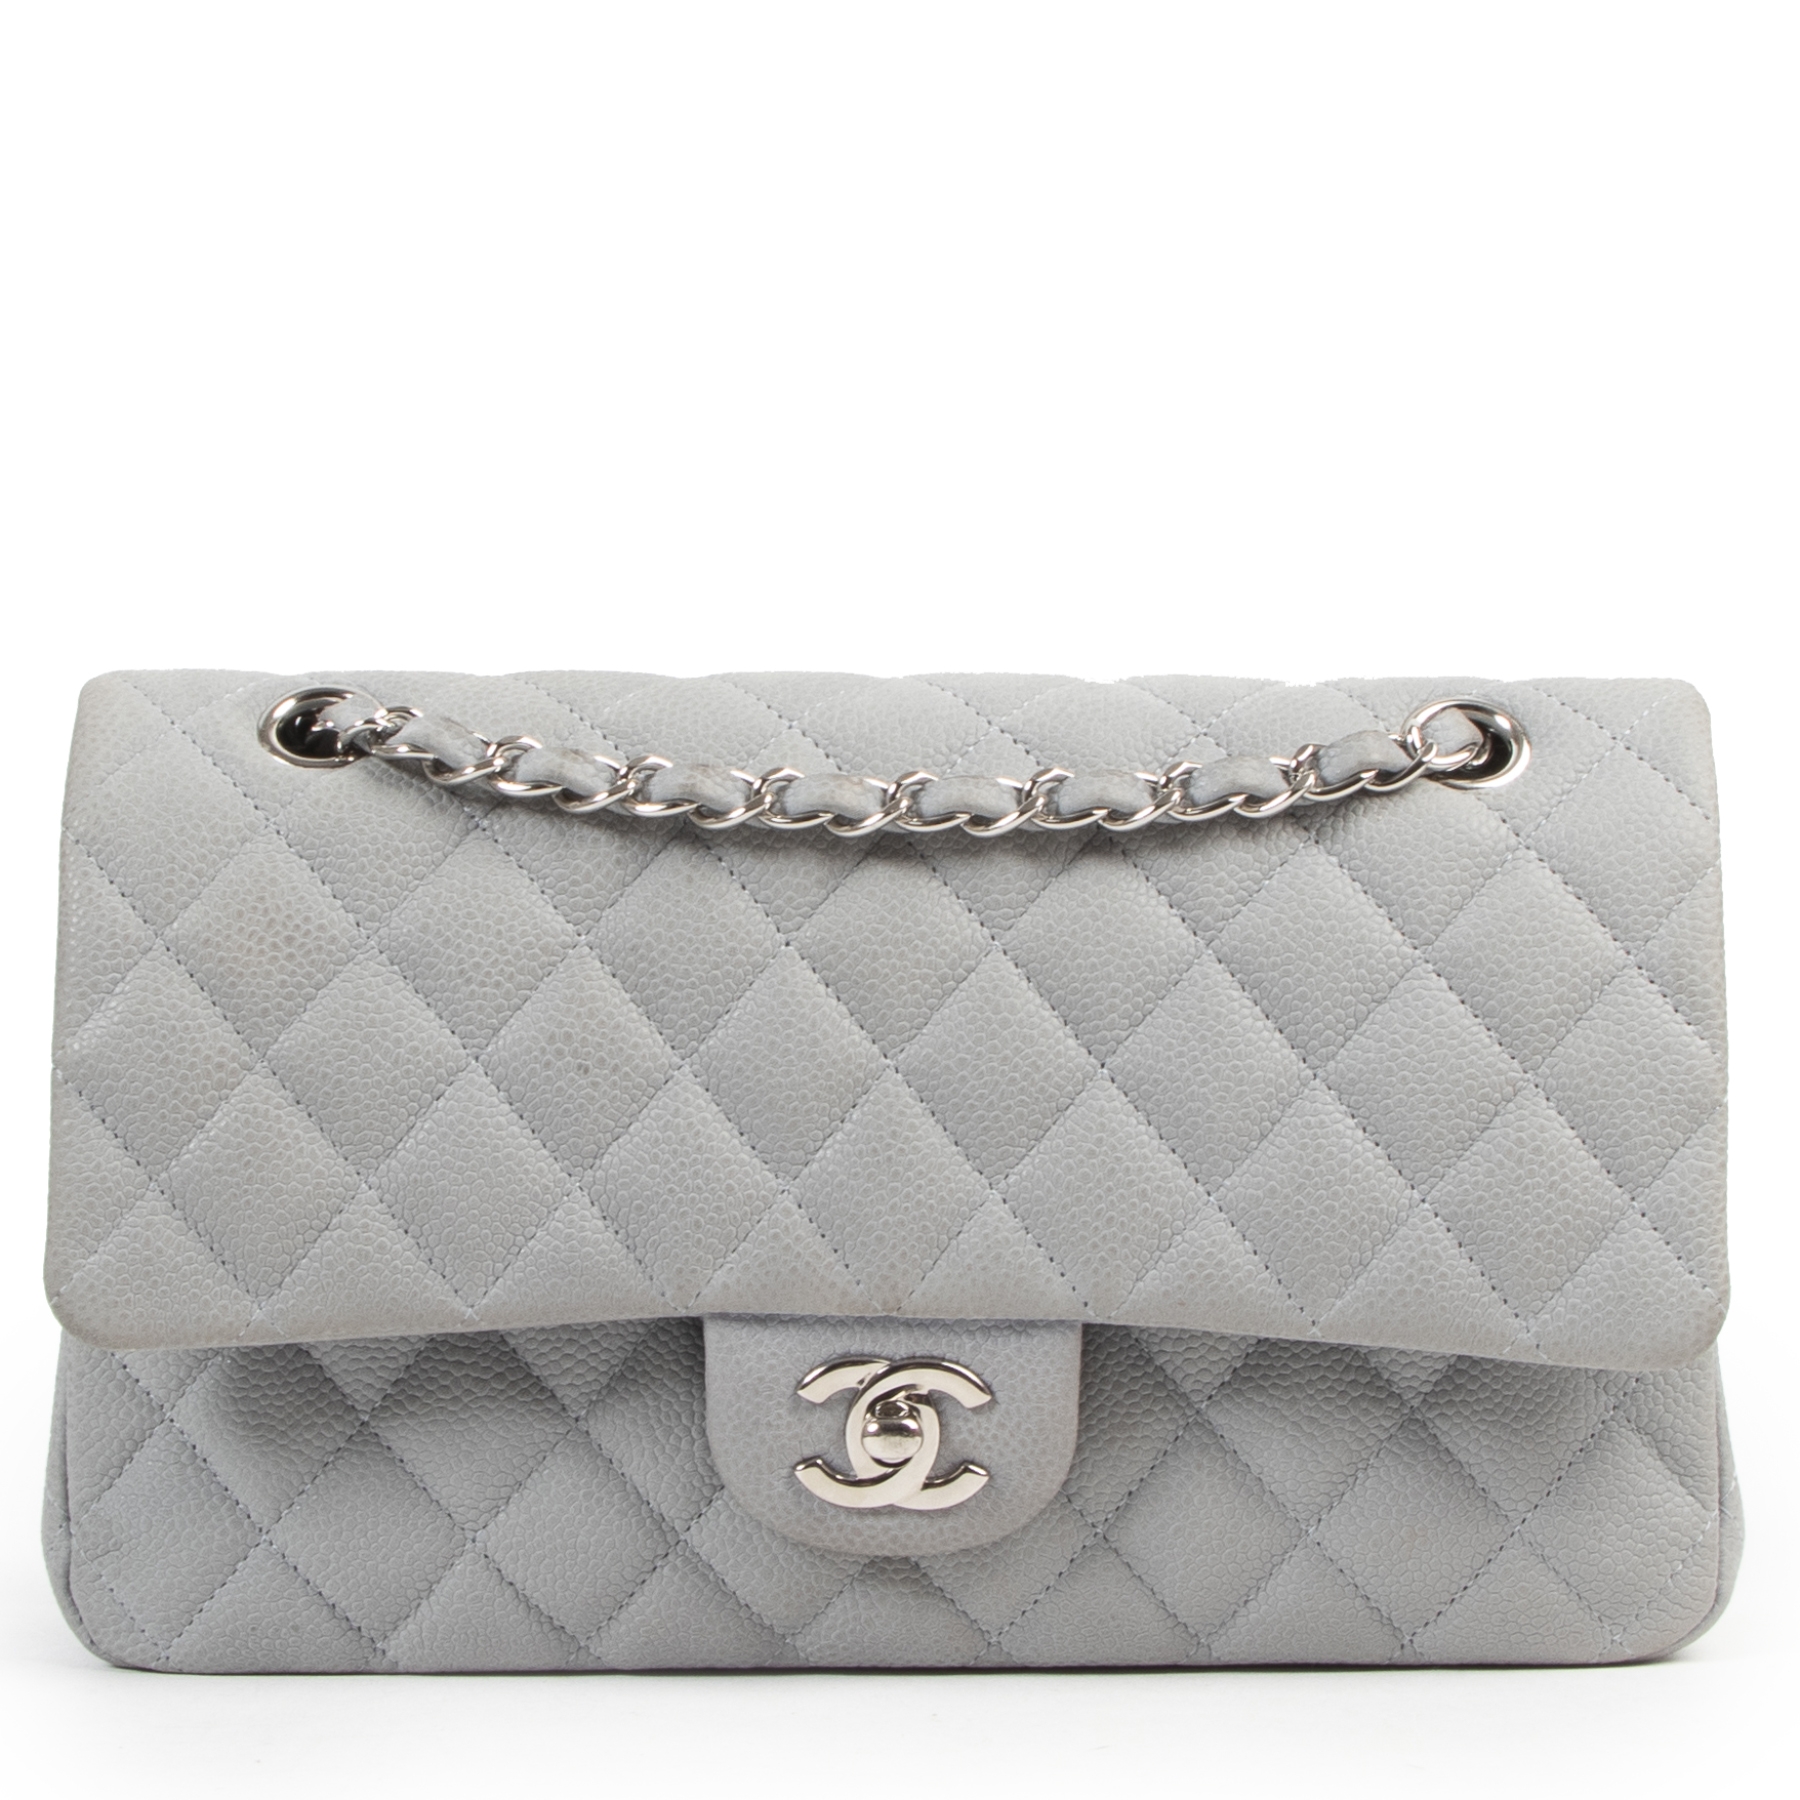 Chanel Grey Suede Caviar Leather Medium Classic Flap Bag